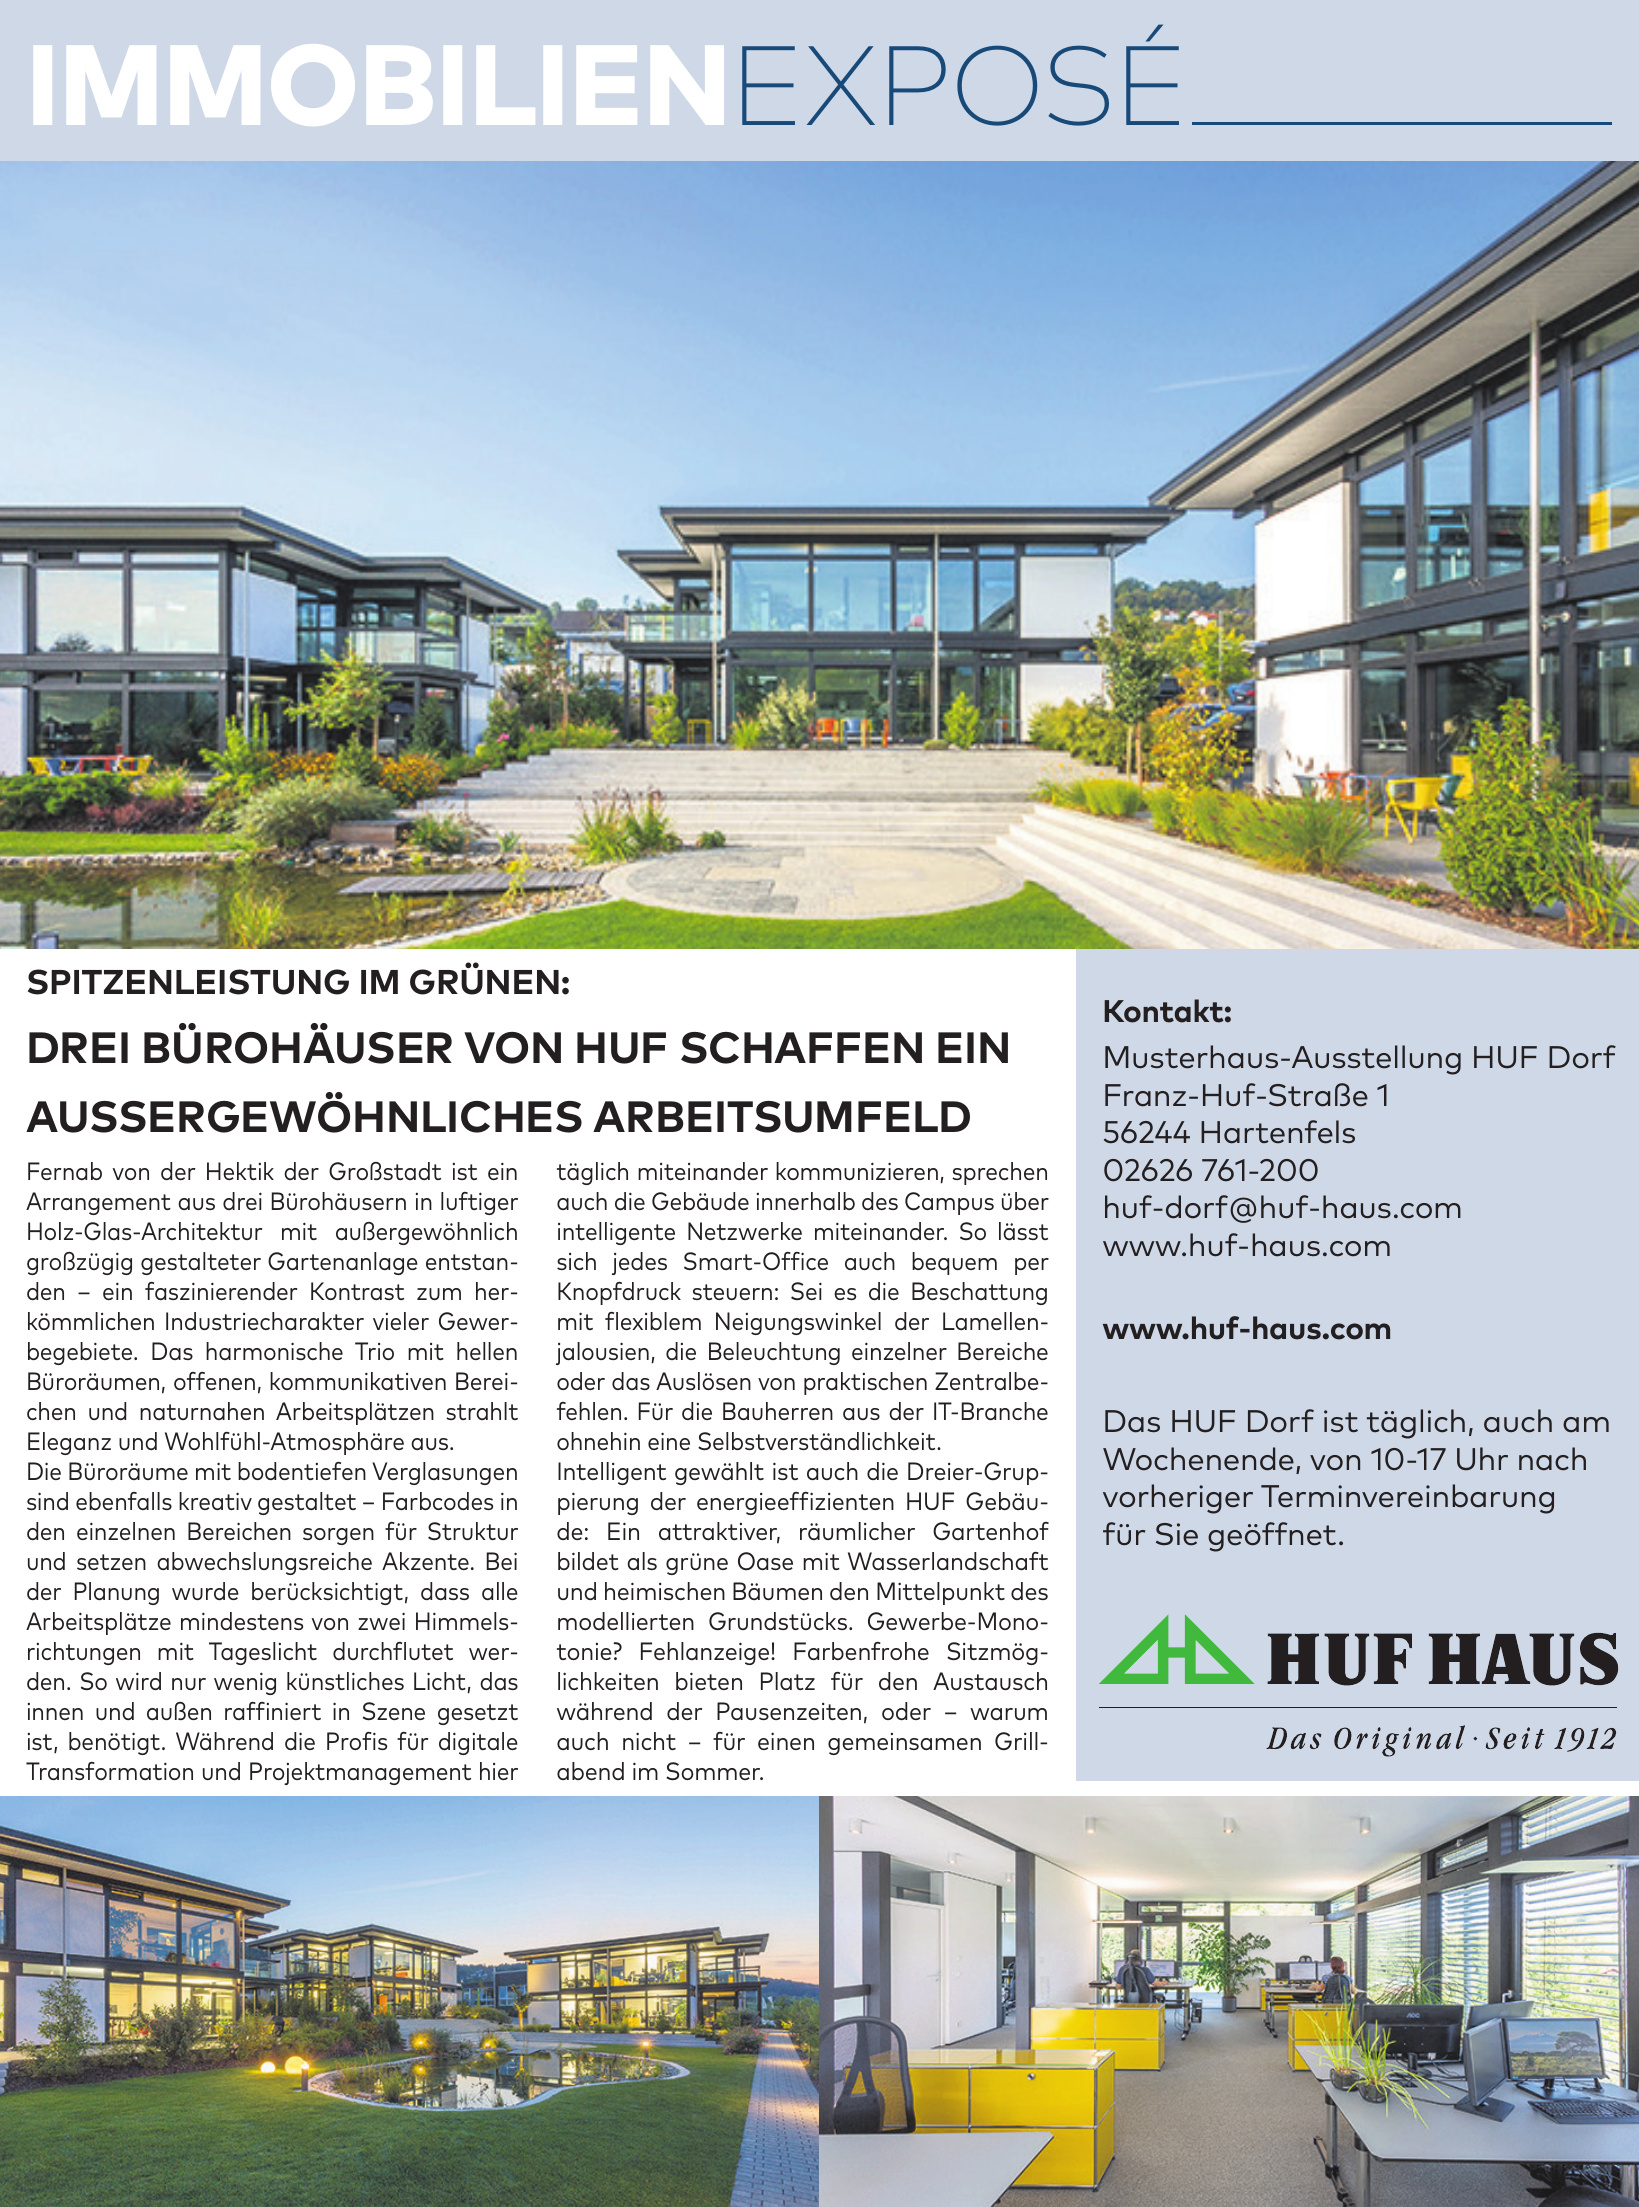 Musterhaus-Ausstellung HUF Dorf